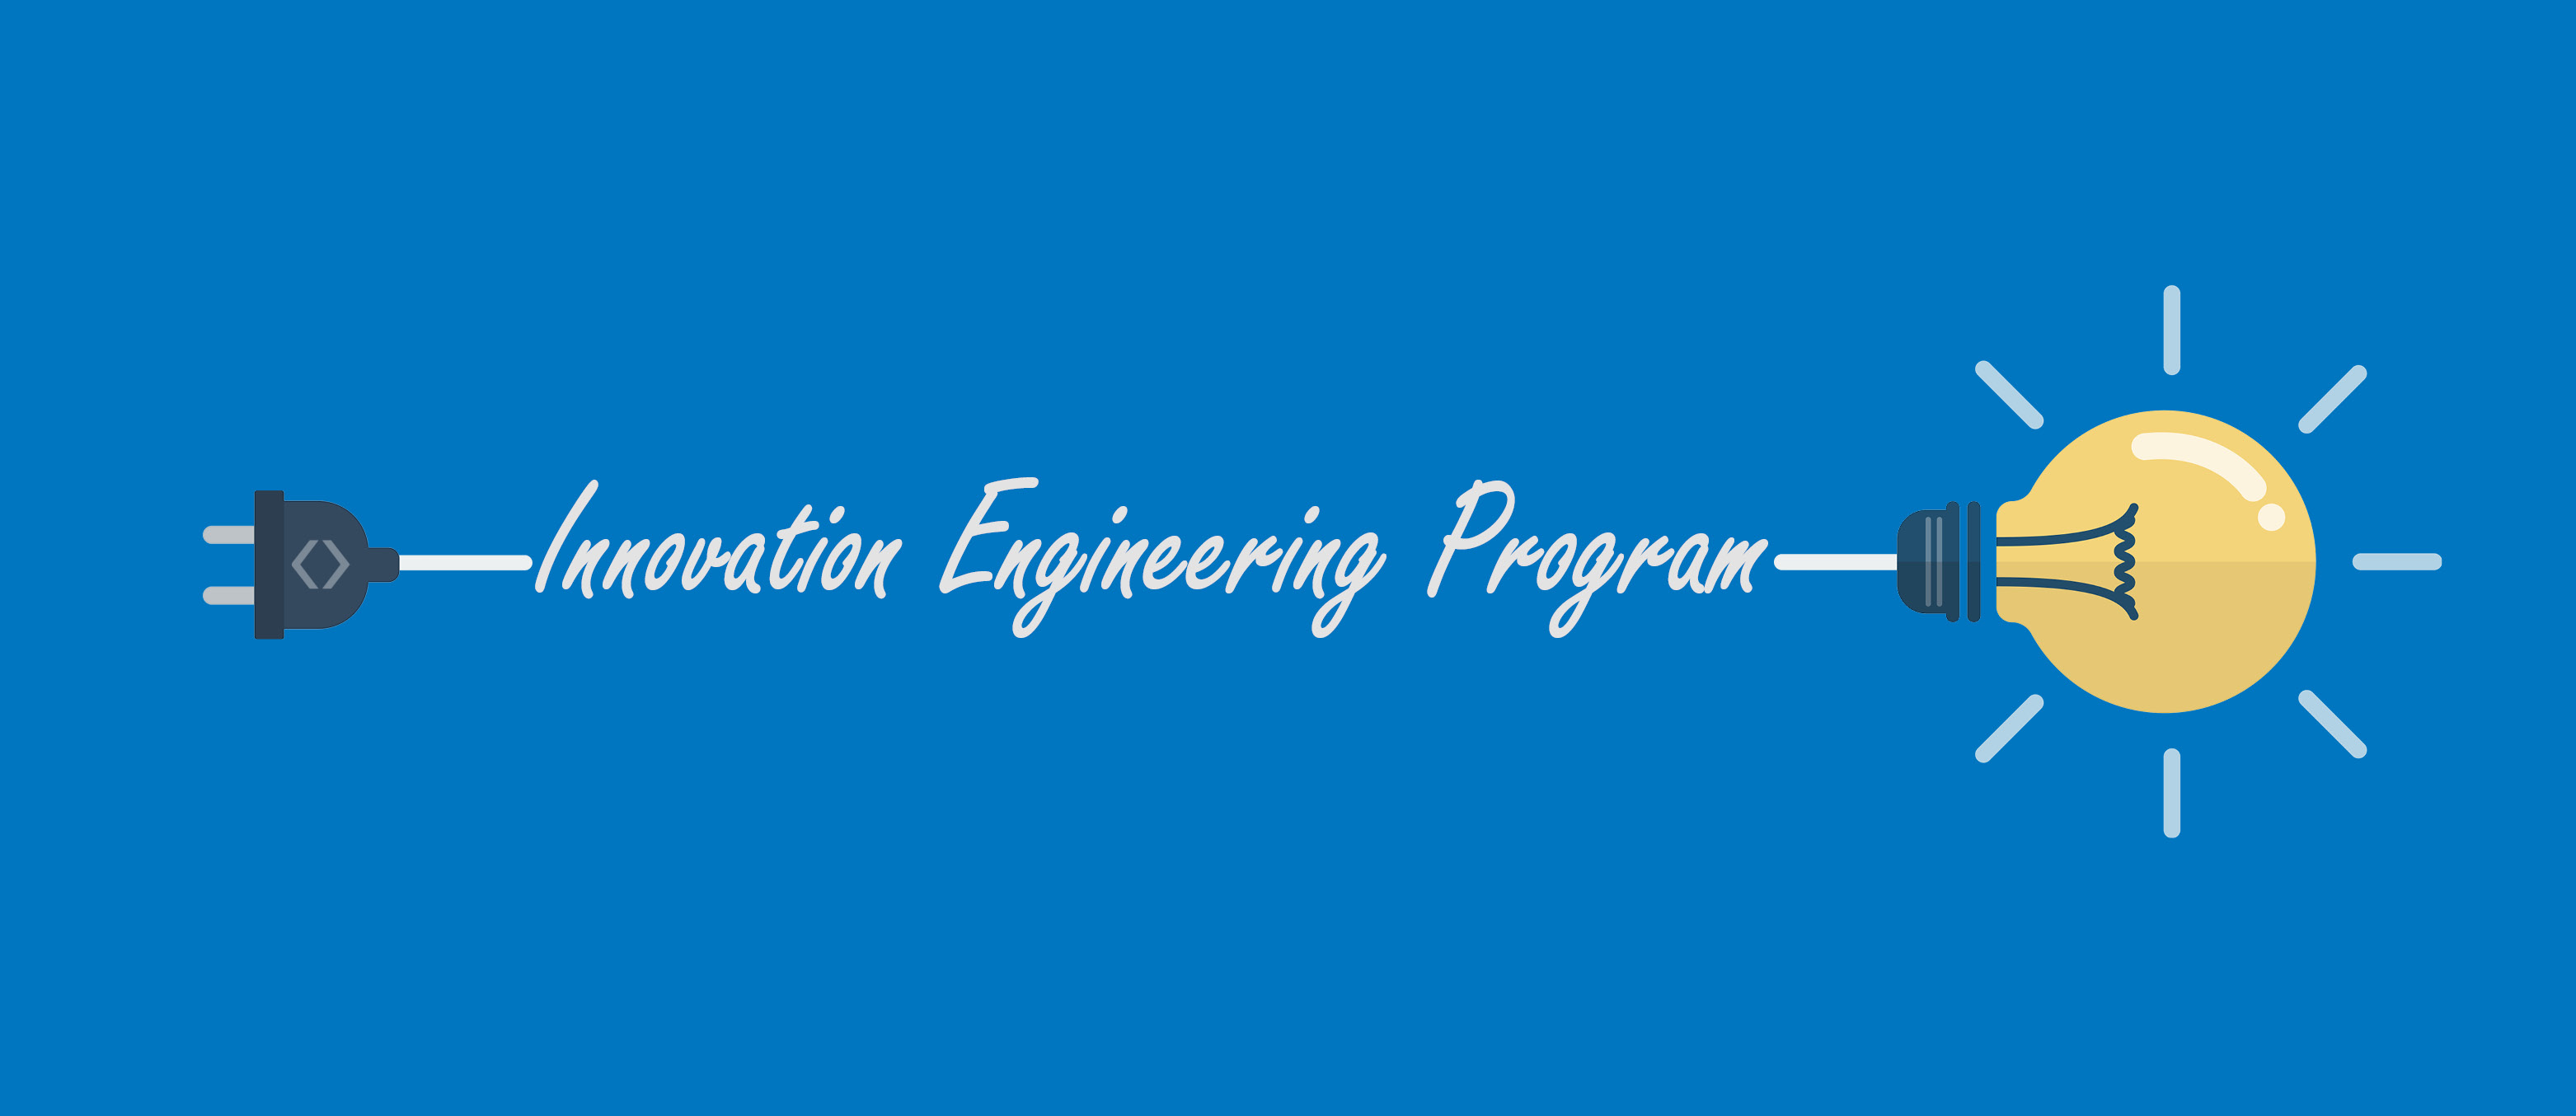 Innovation Engineering Program: The Research & Development arm of Clark Dietz